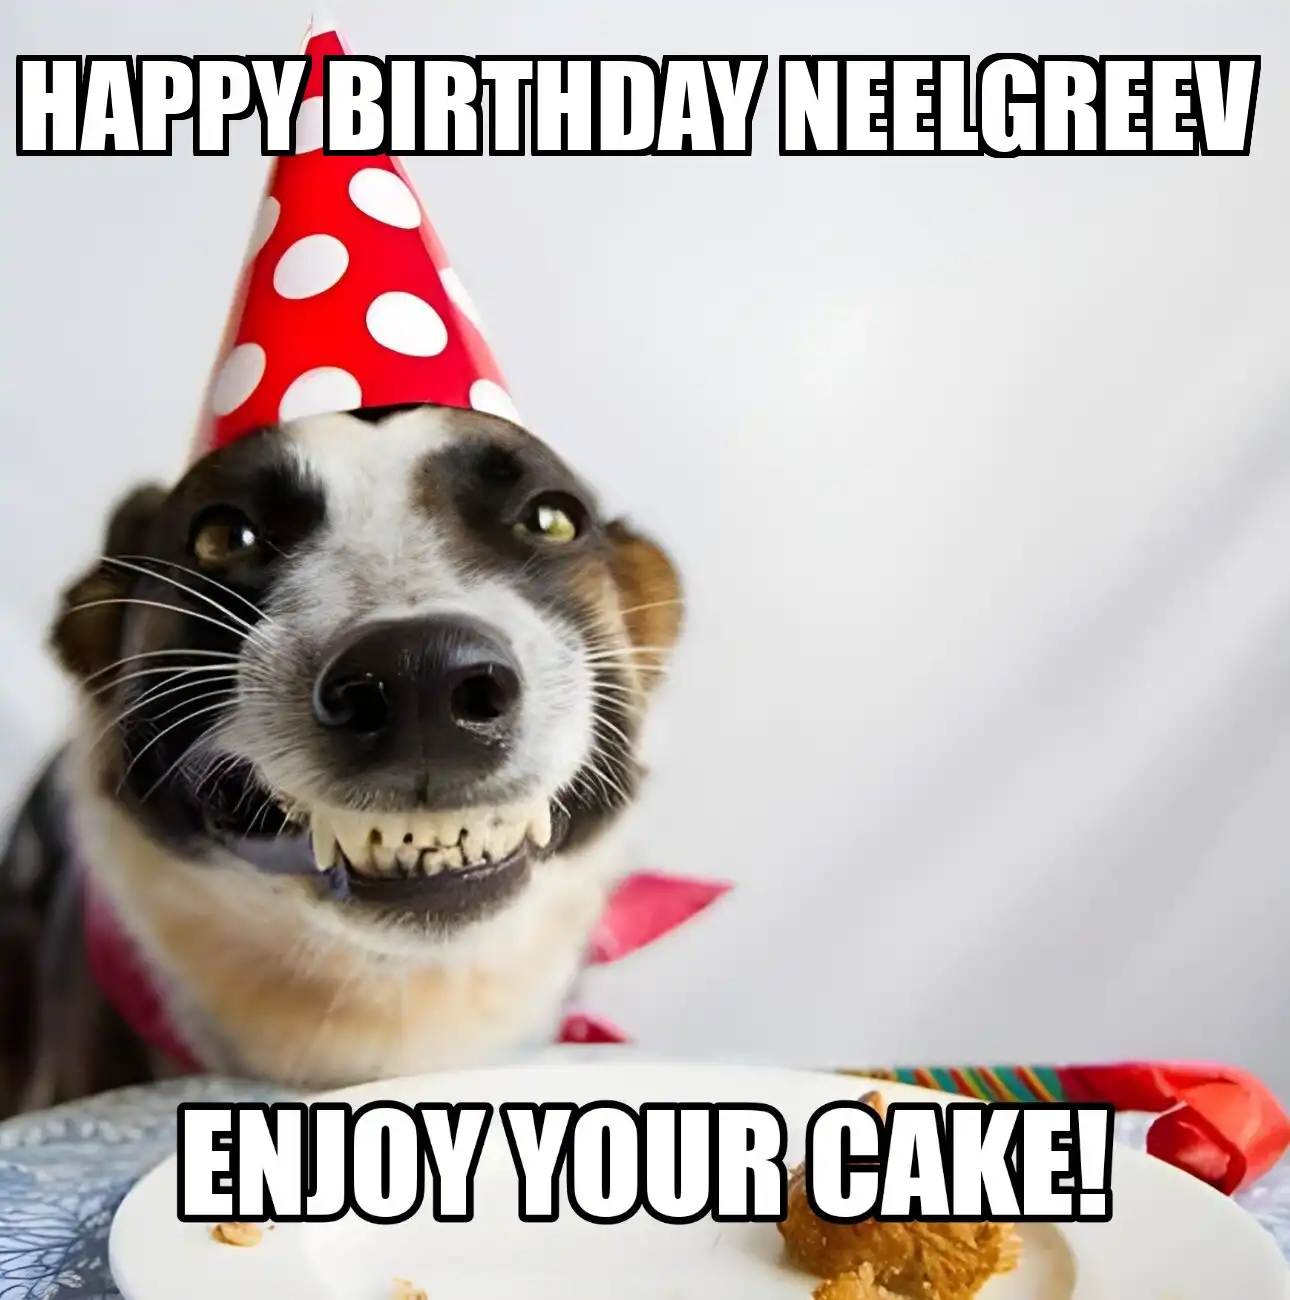 Happy Birthday Neelgreev Enjoy Your Cake Dog Meme